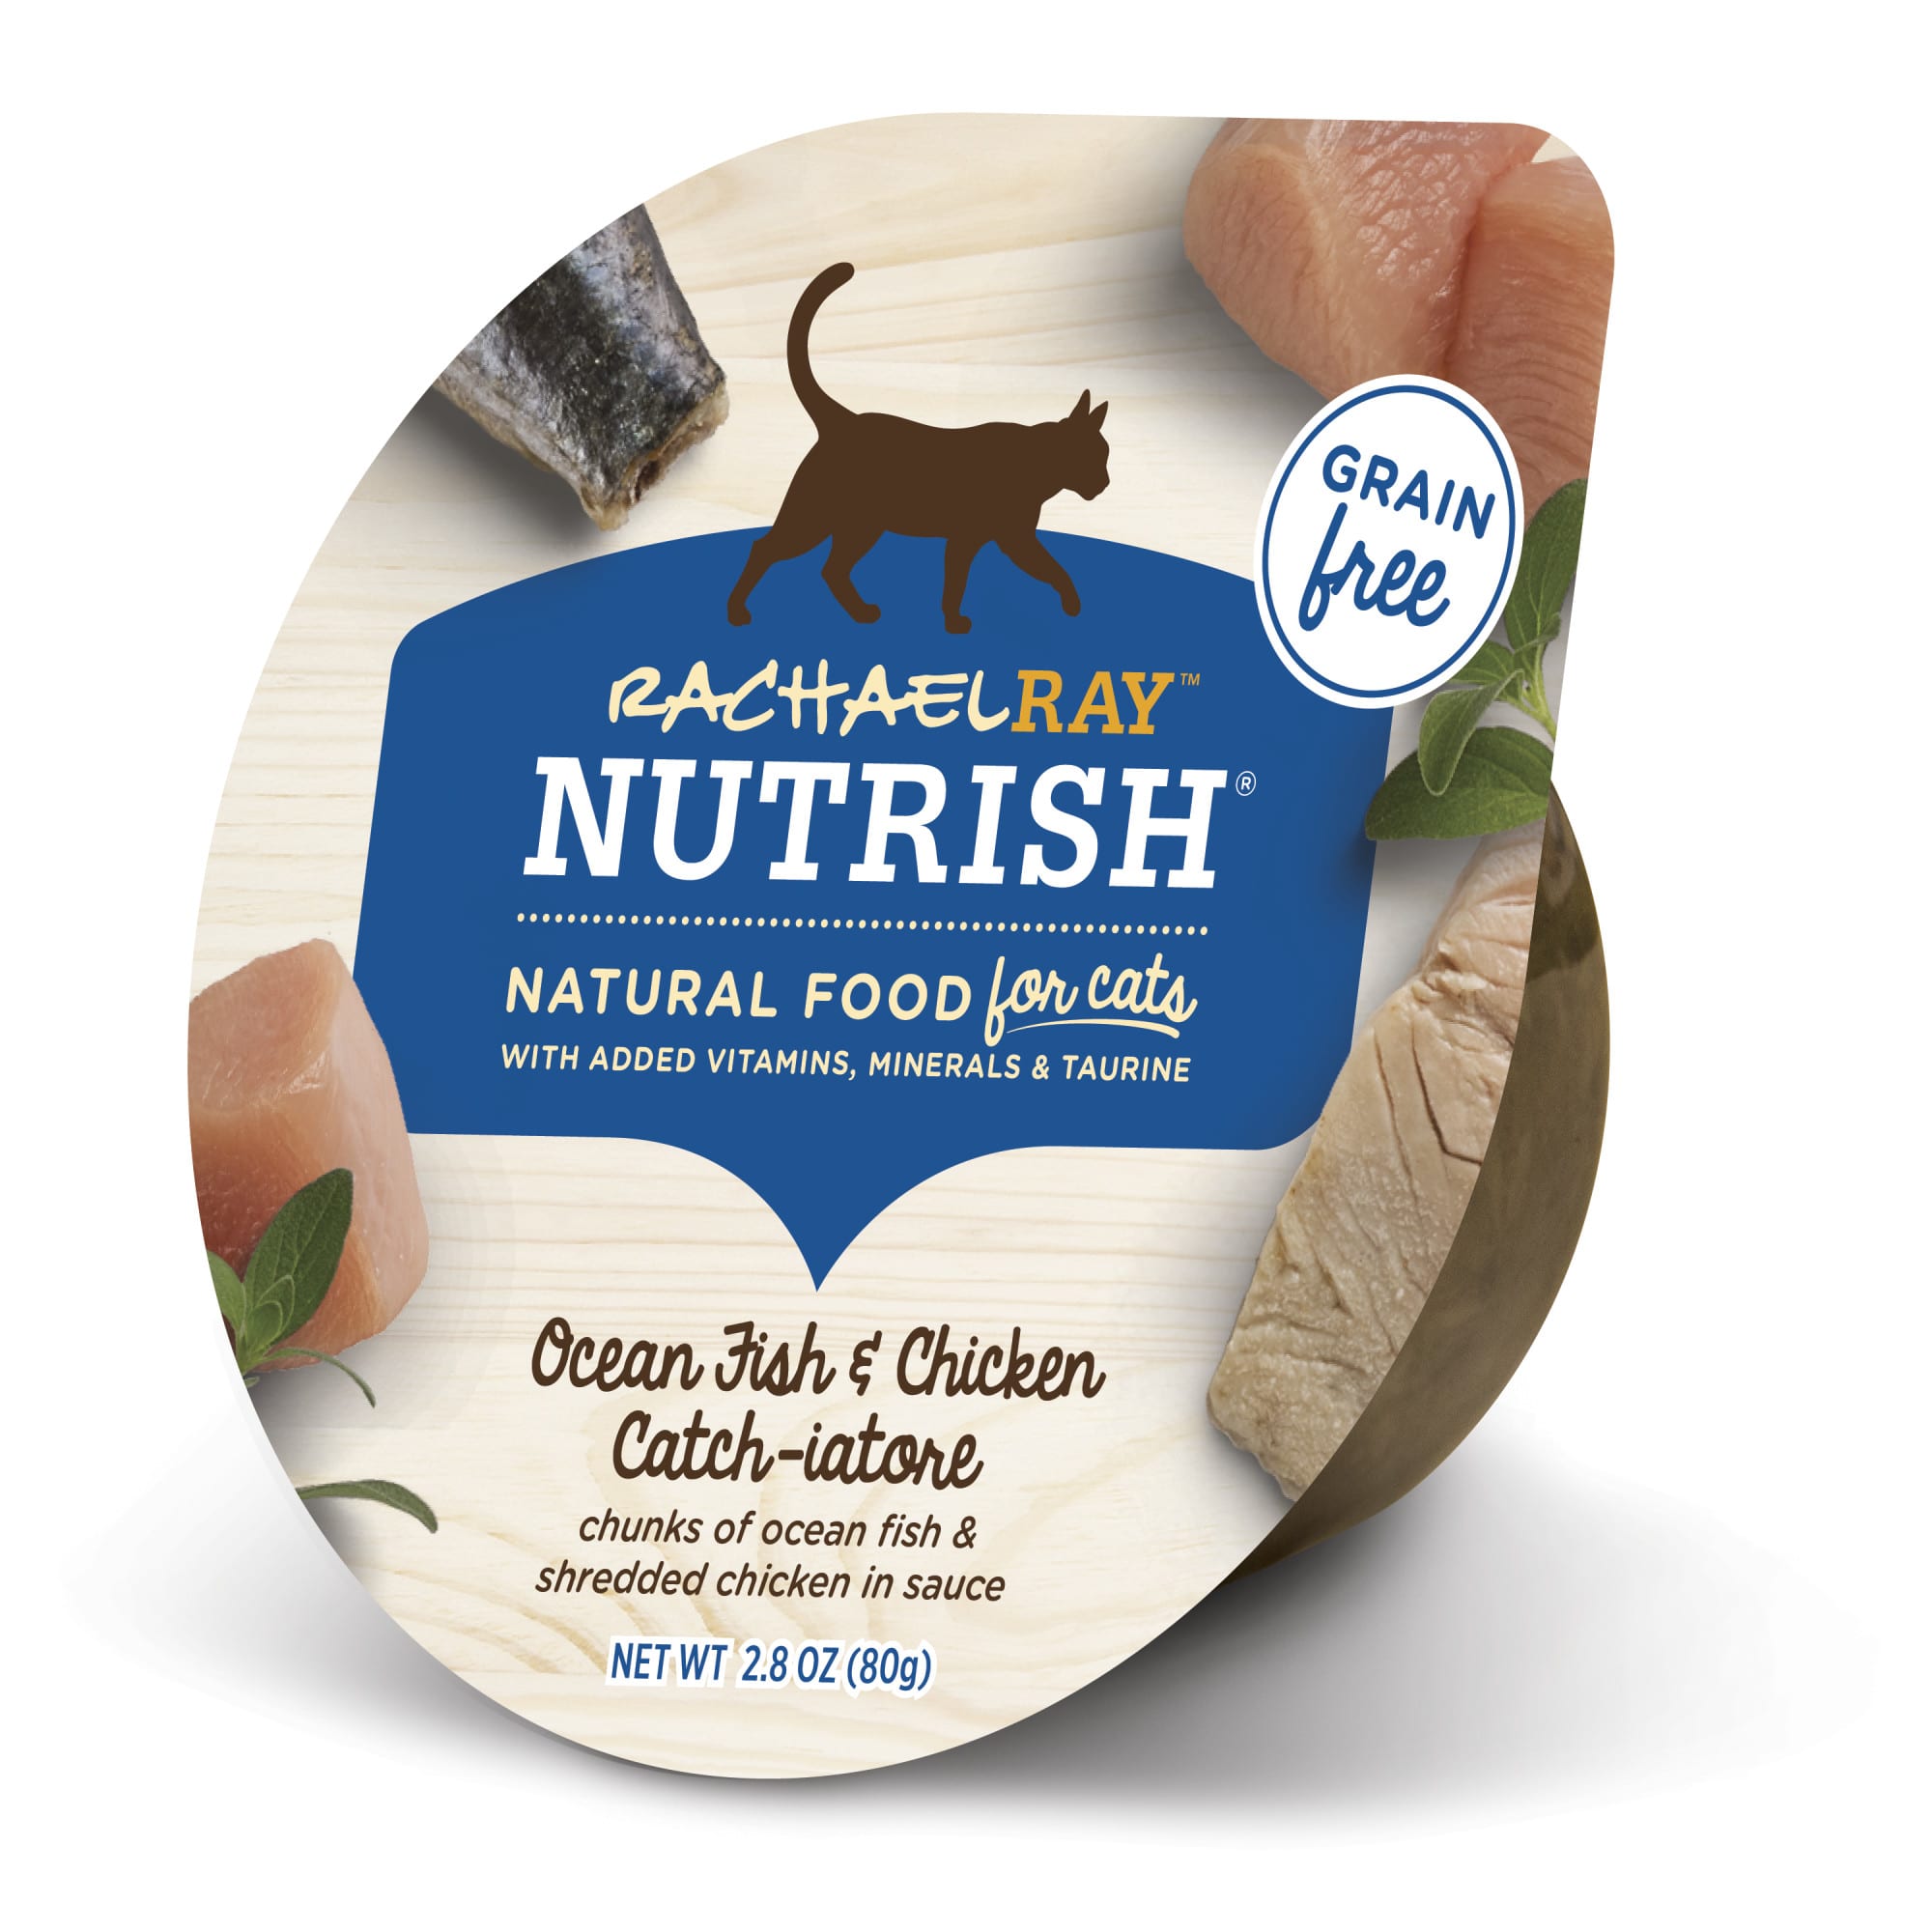 Rachael Ray Nutrish Natural Grain Free Ocean Fish & Chicken Catch-iatore Wet Cat Food, 2.8 oz., Case of 24, 24 X 2.8 OZ